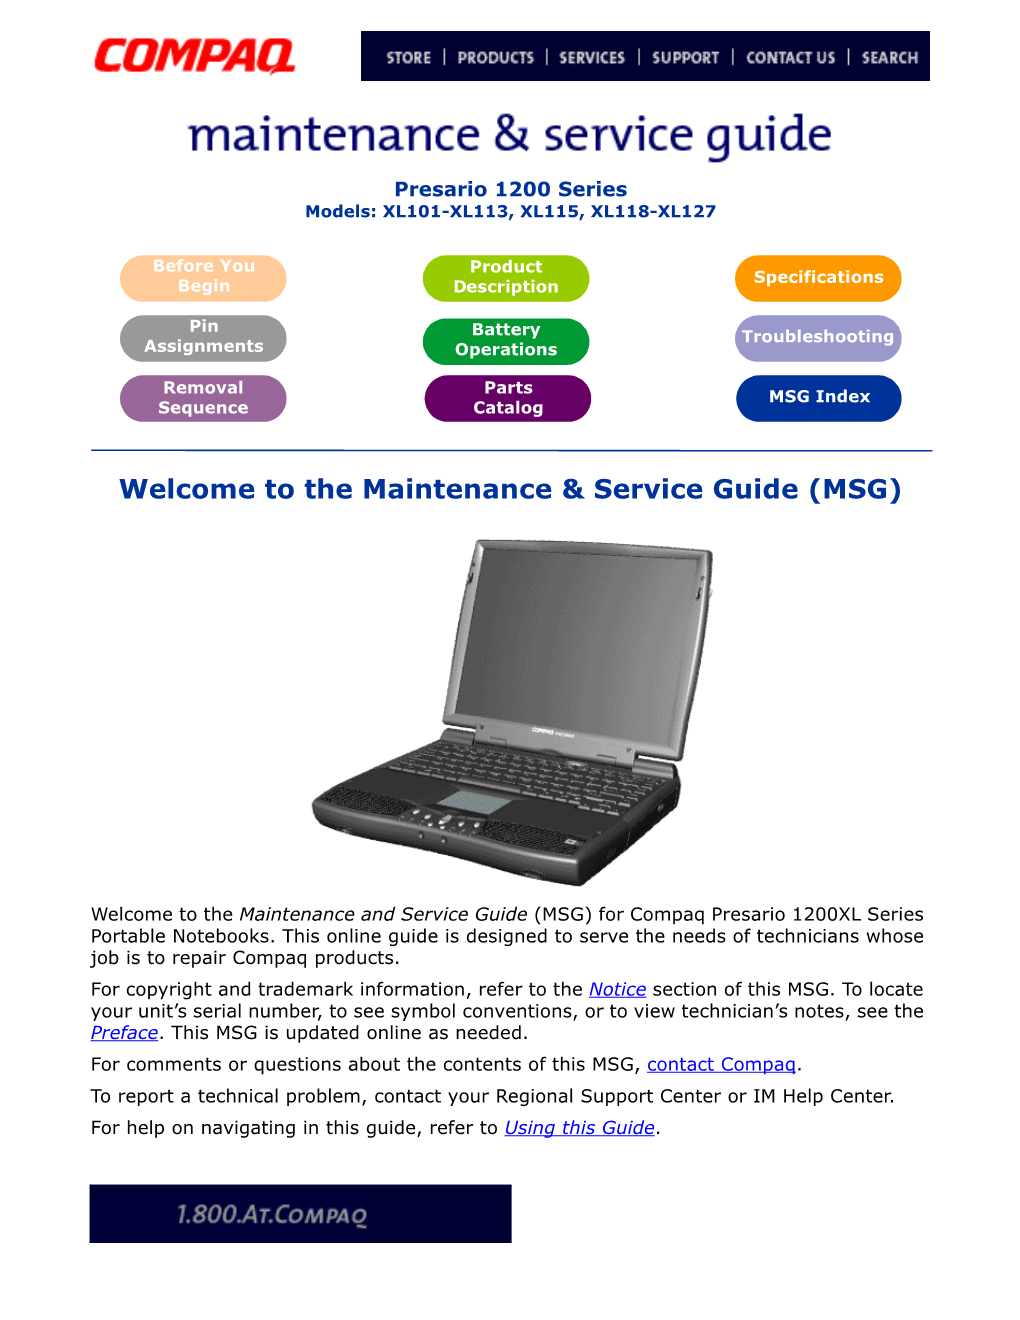 Compaq Presario 1200 Series Maintenance & Service Guide